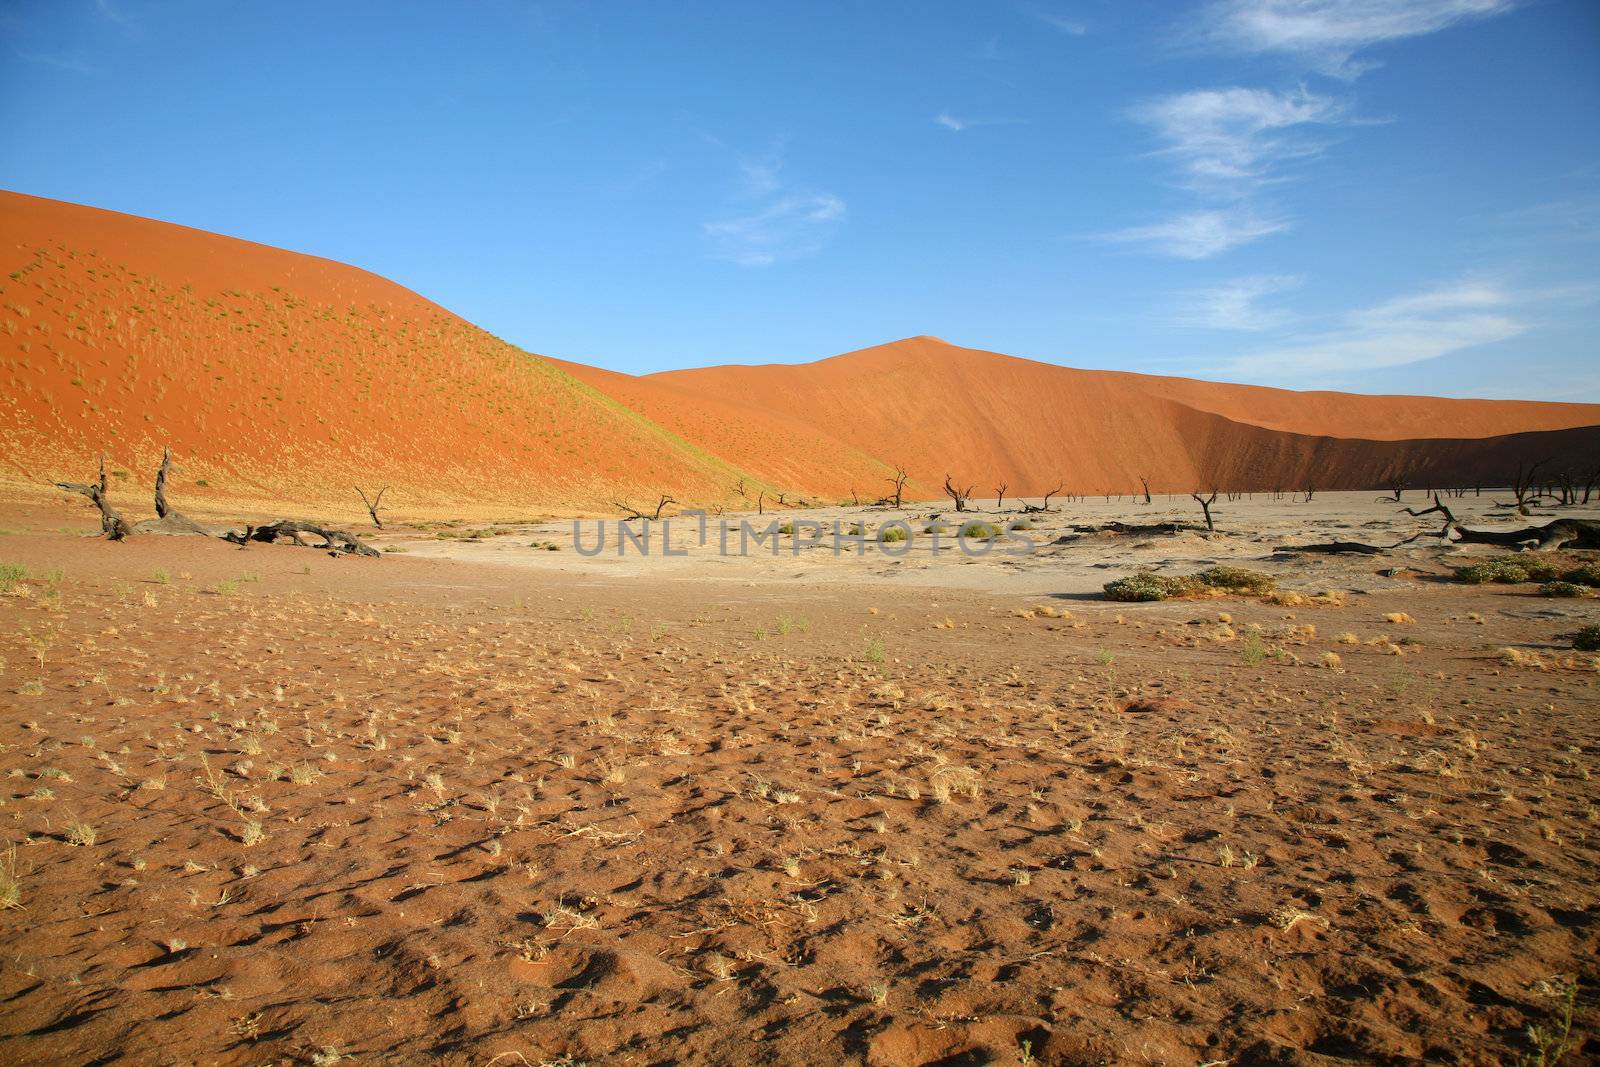 Sossusvlei dunes by watchtheworld